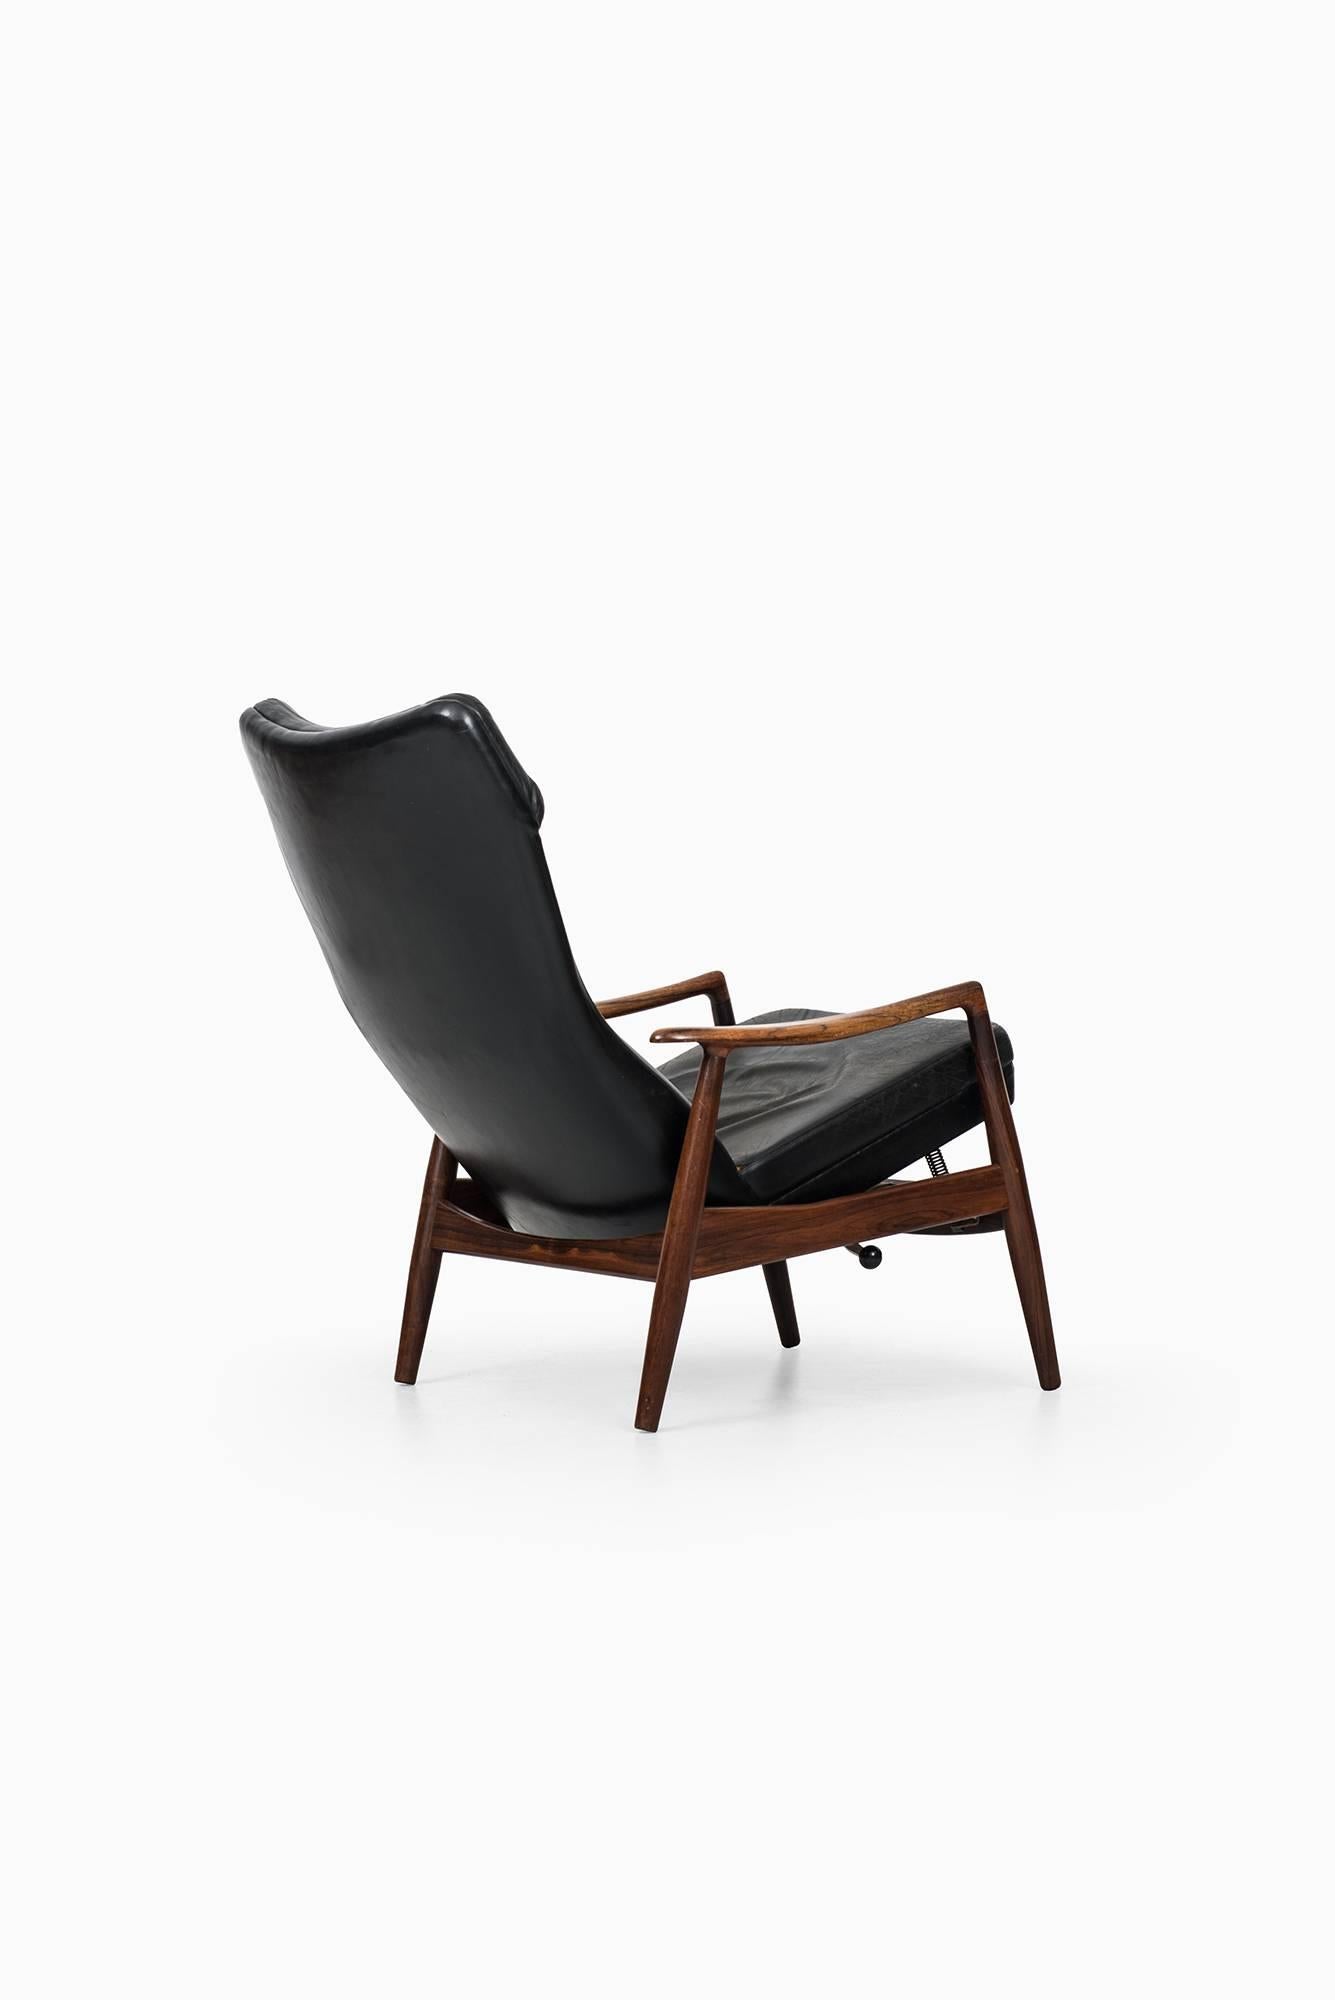 Ib Kofod-Larsen Reclining Chair Model PD-21 by Povl Dinesen in Denmark In Excellent Condition In Limhamn, Skåne län